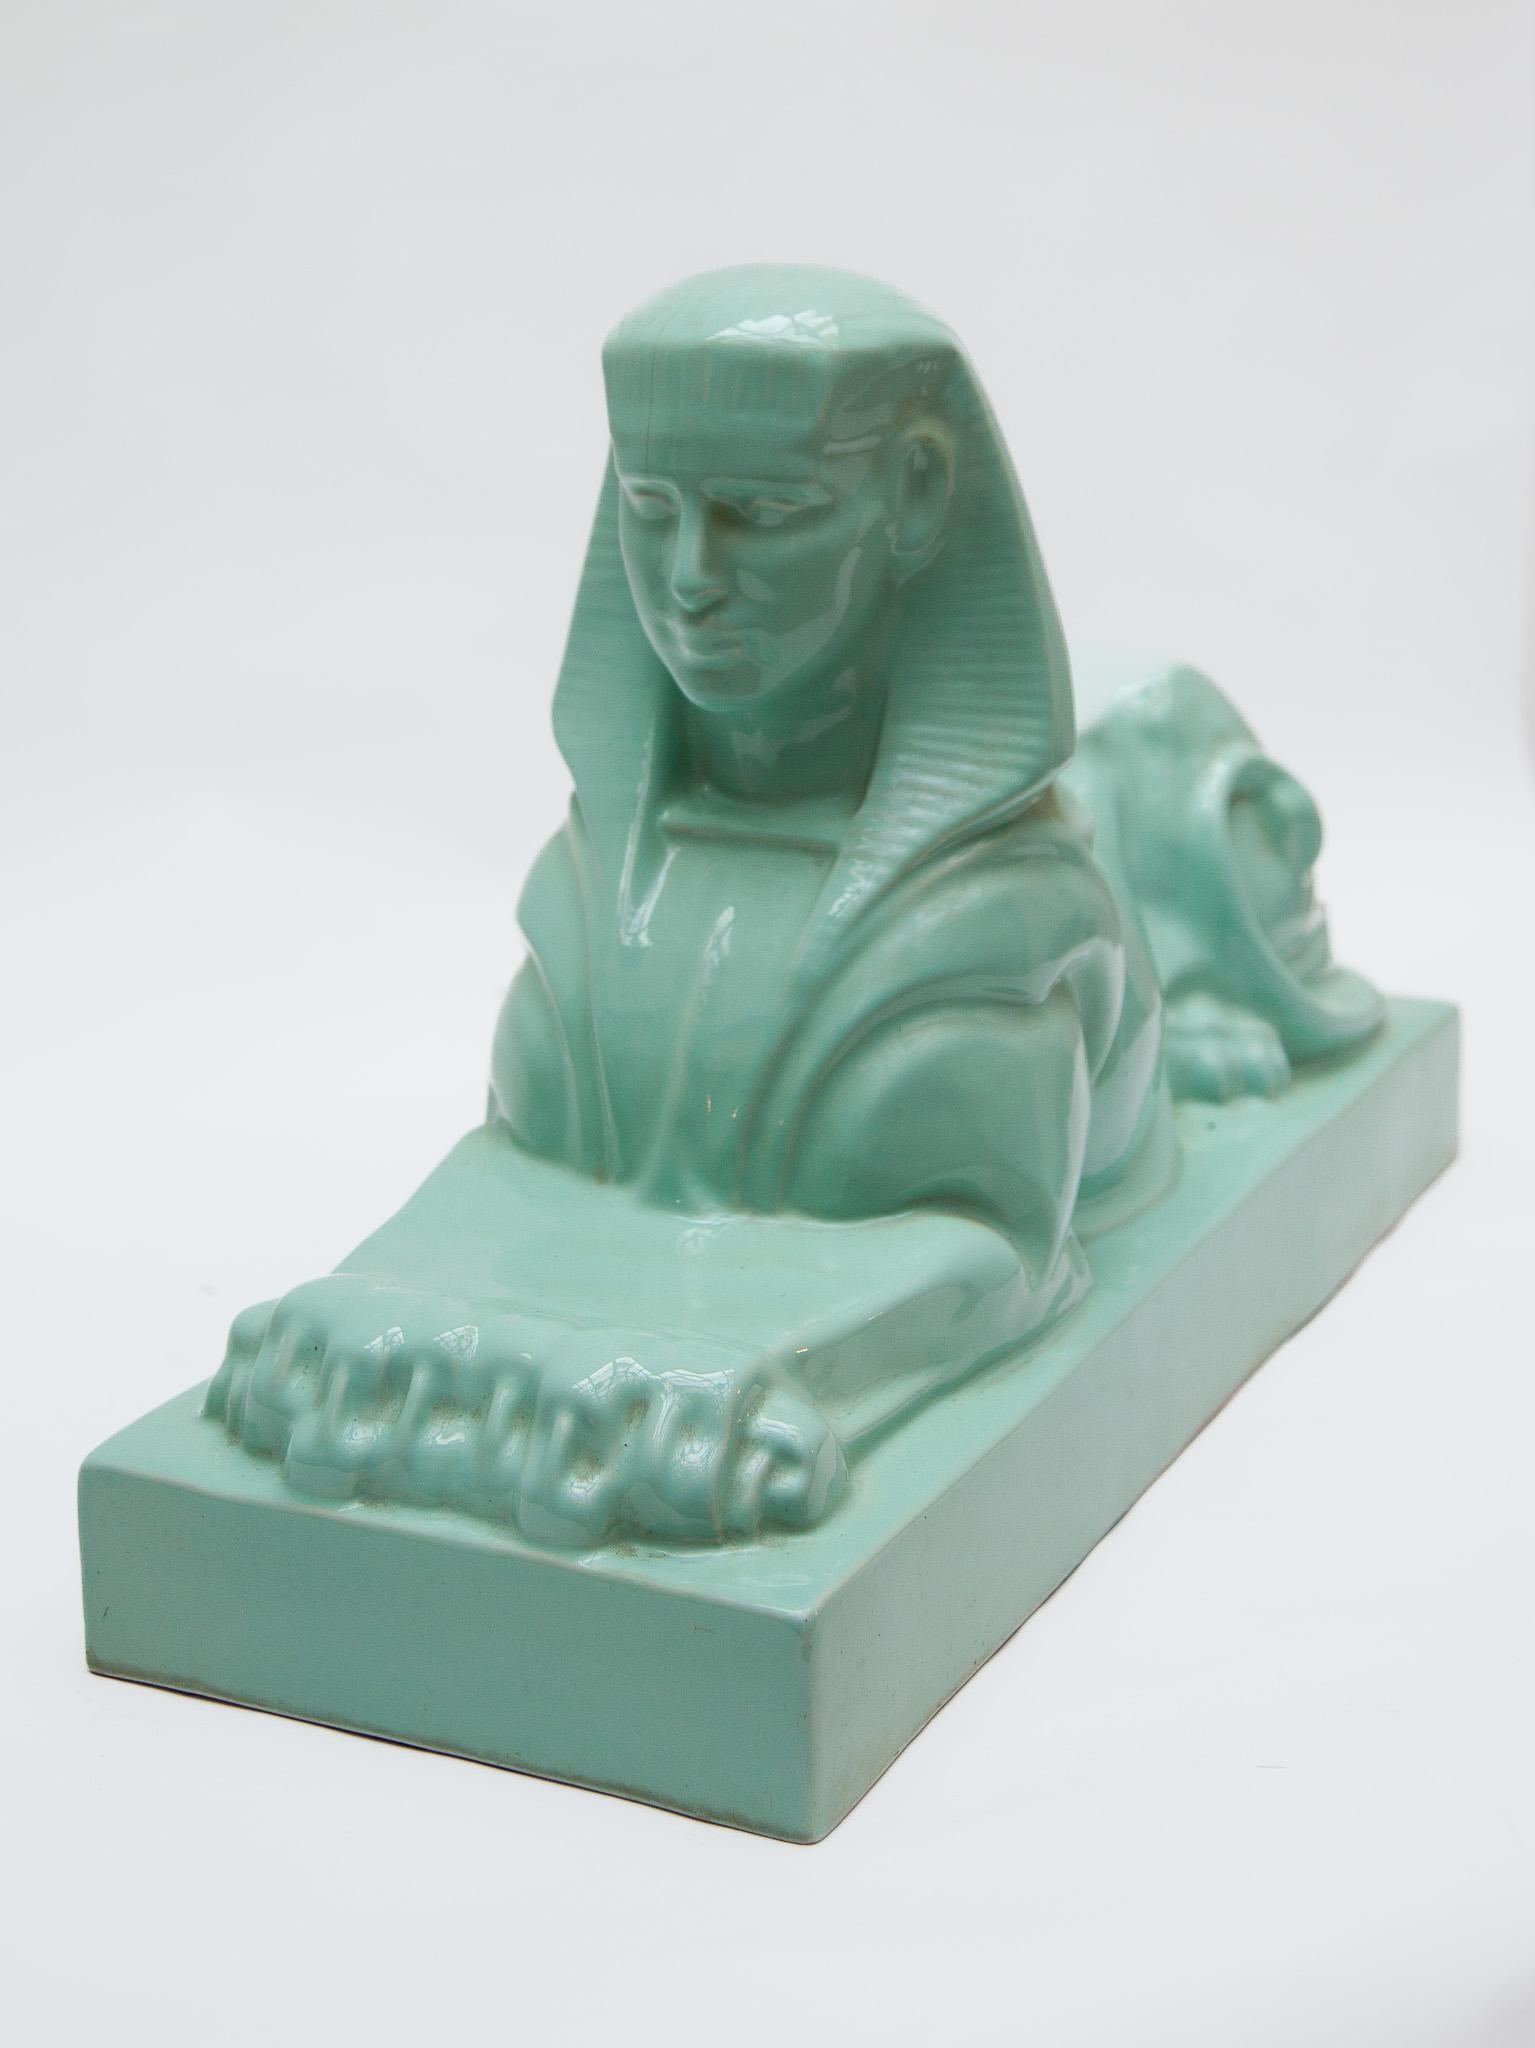 Ceramic Sphinx Designed by Vos for Royal Sphinx Maastricht/ Petrus Regout 2